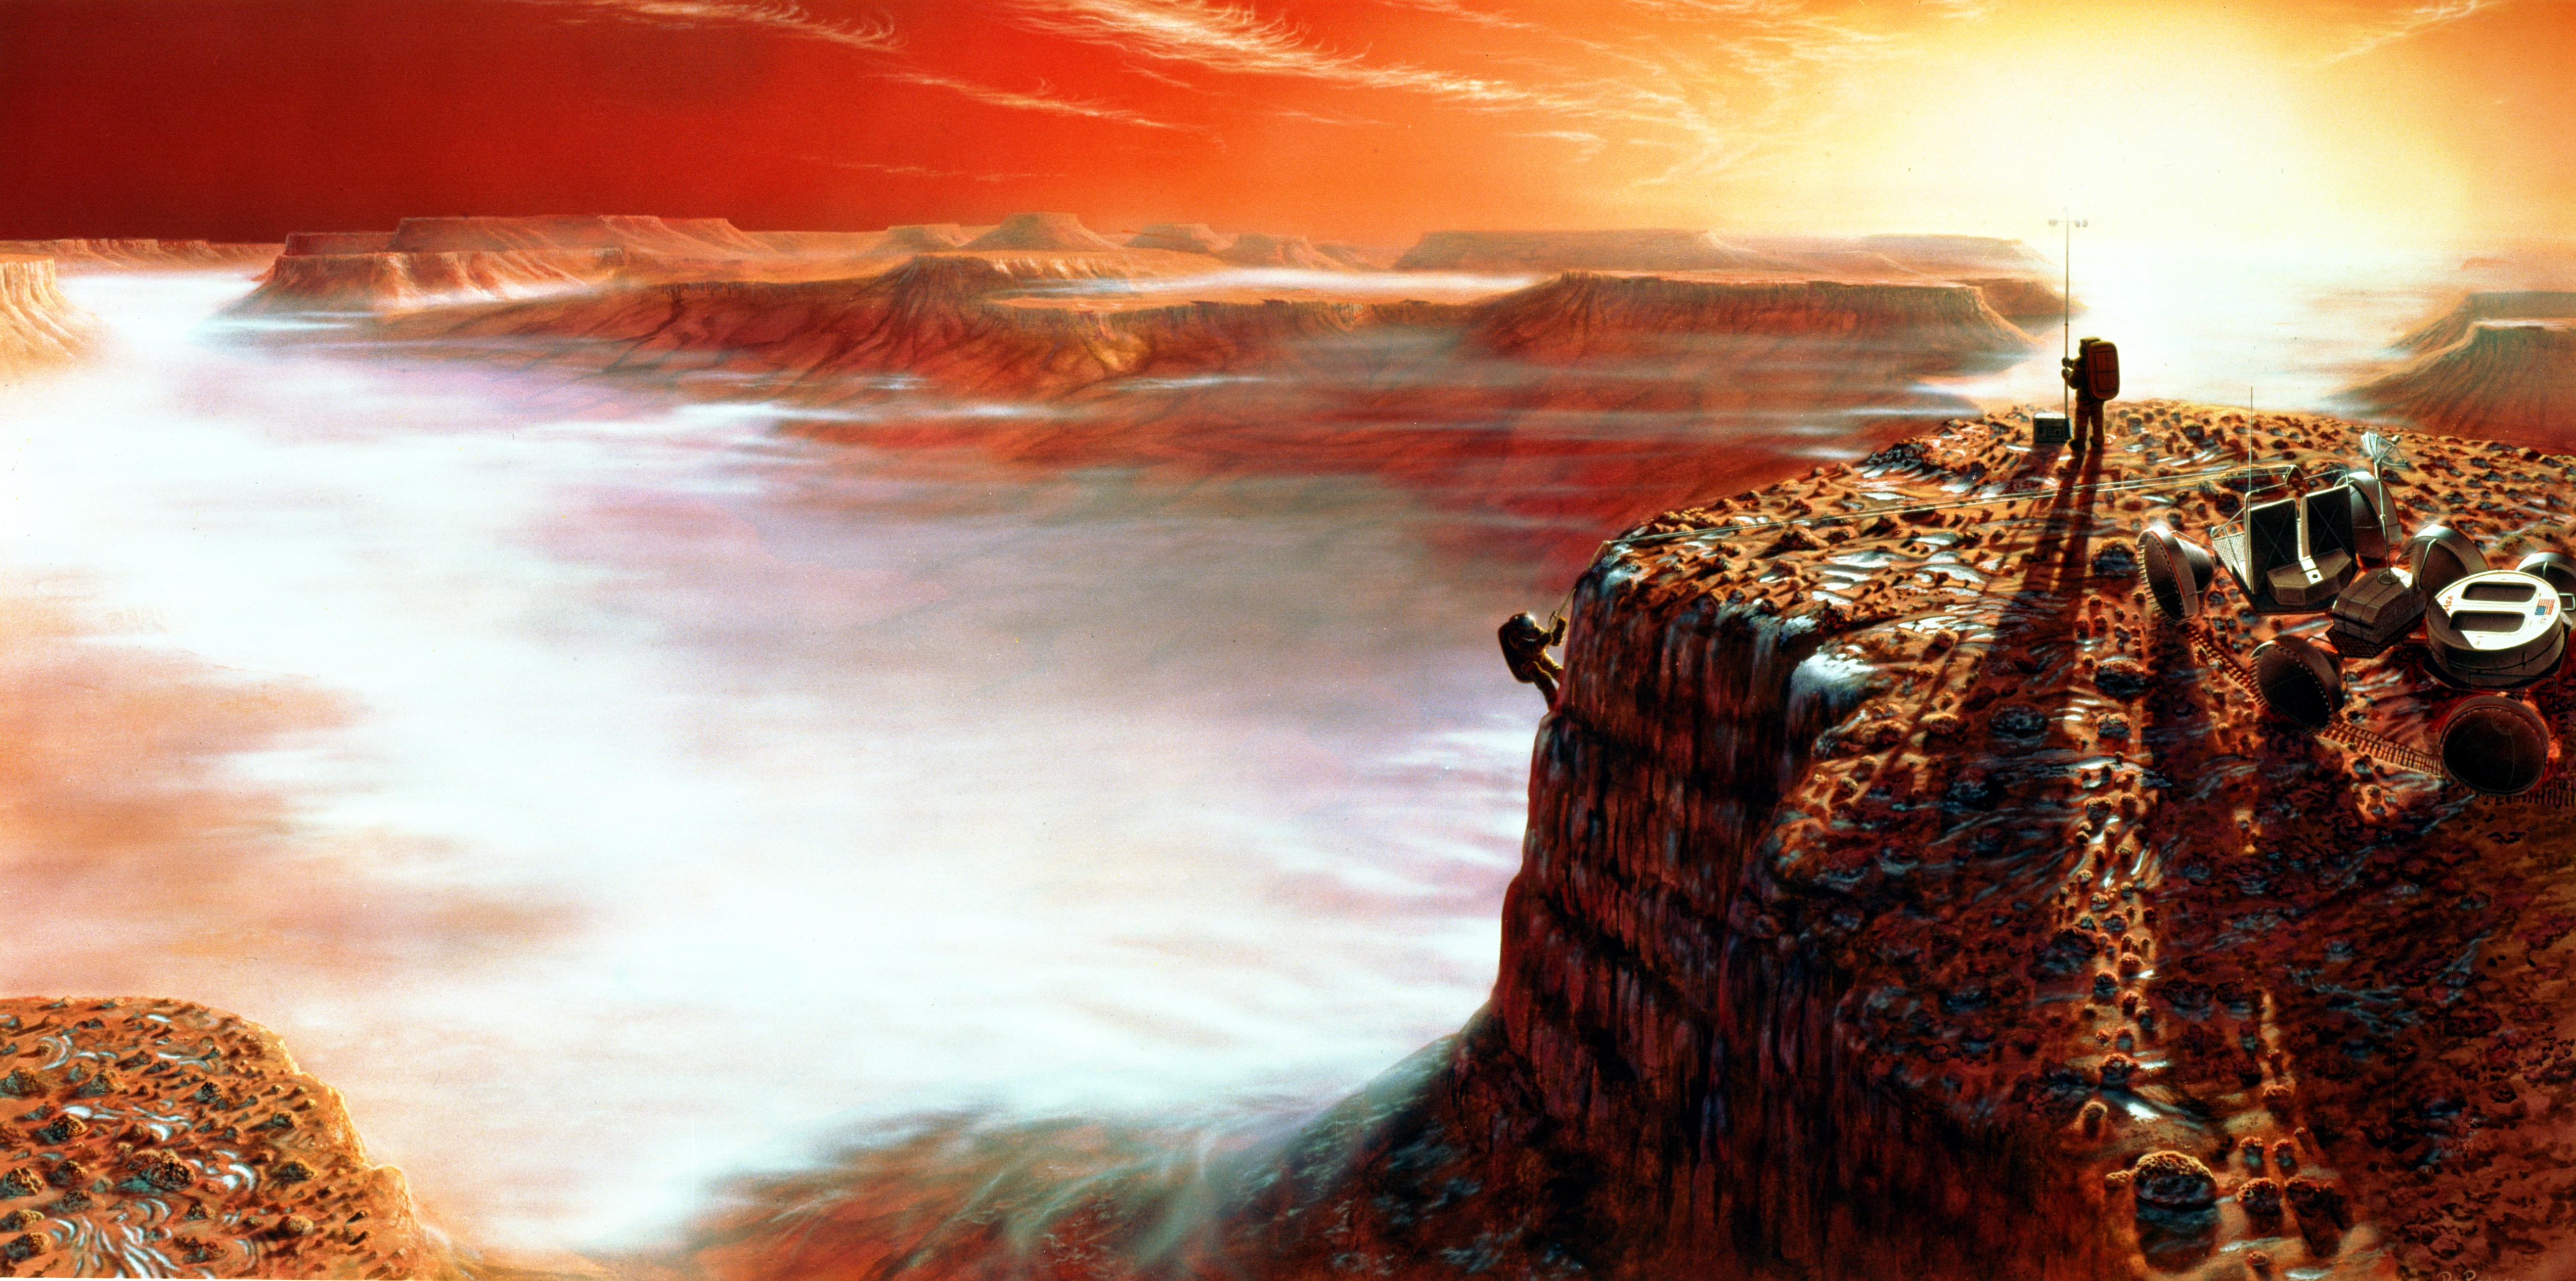 Exploration of Mars - Wikipedia